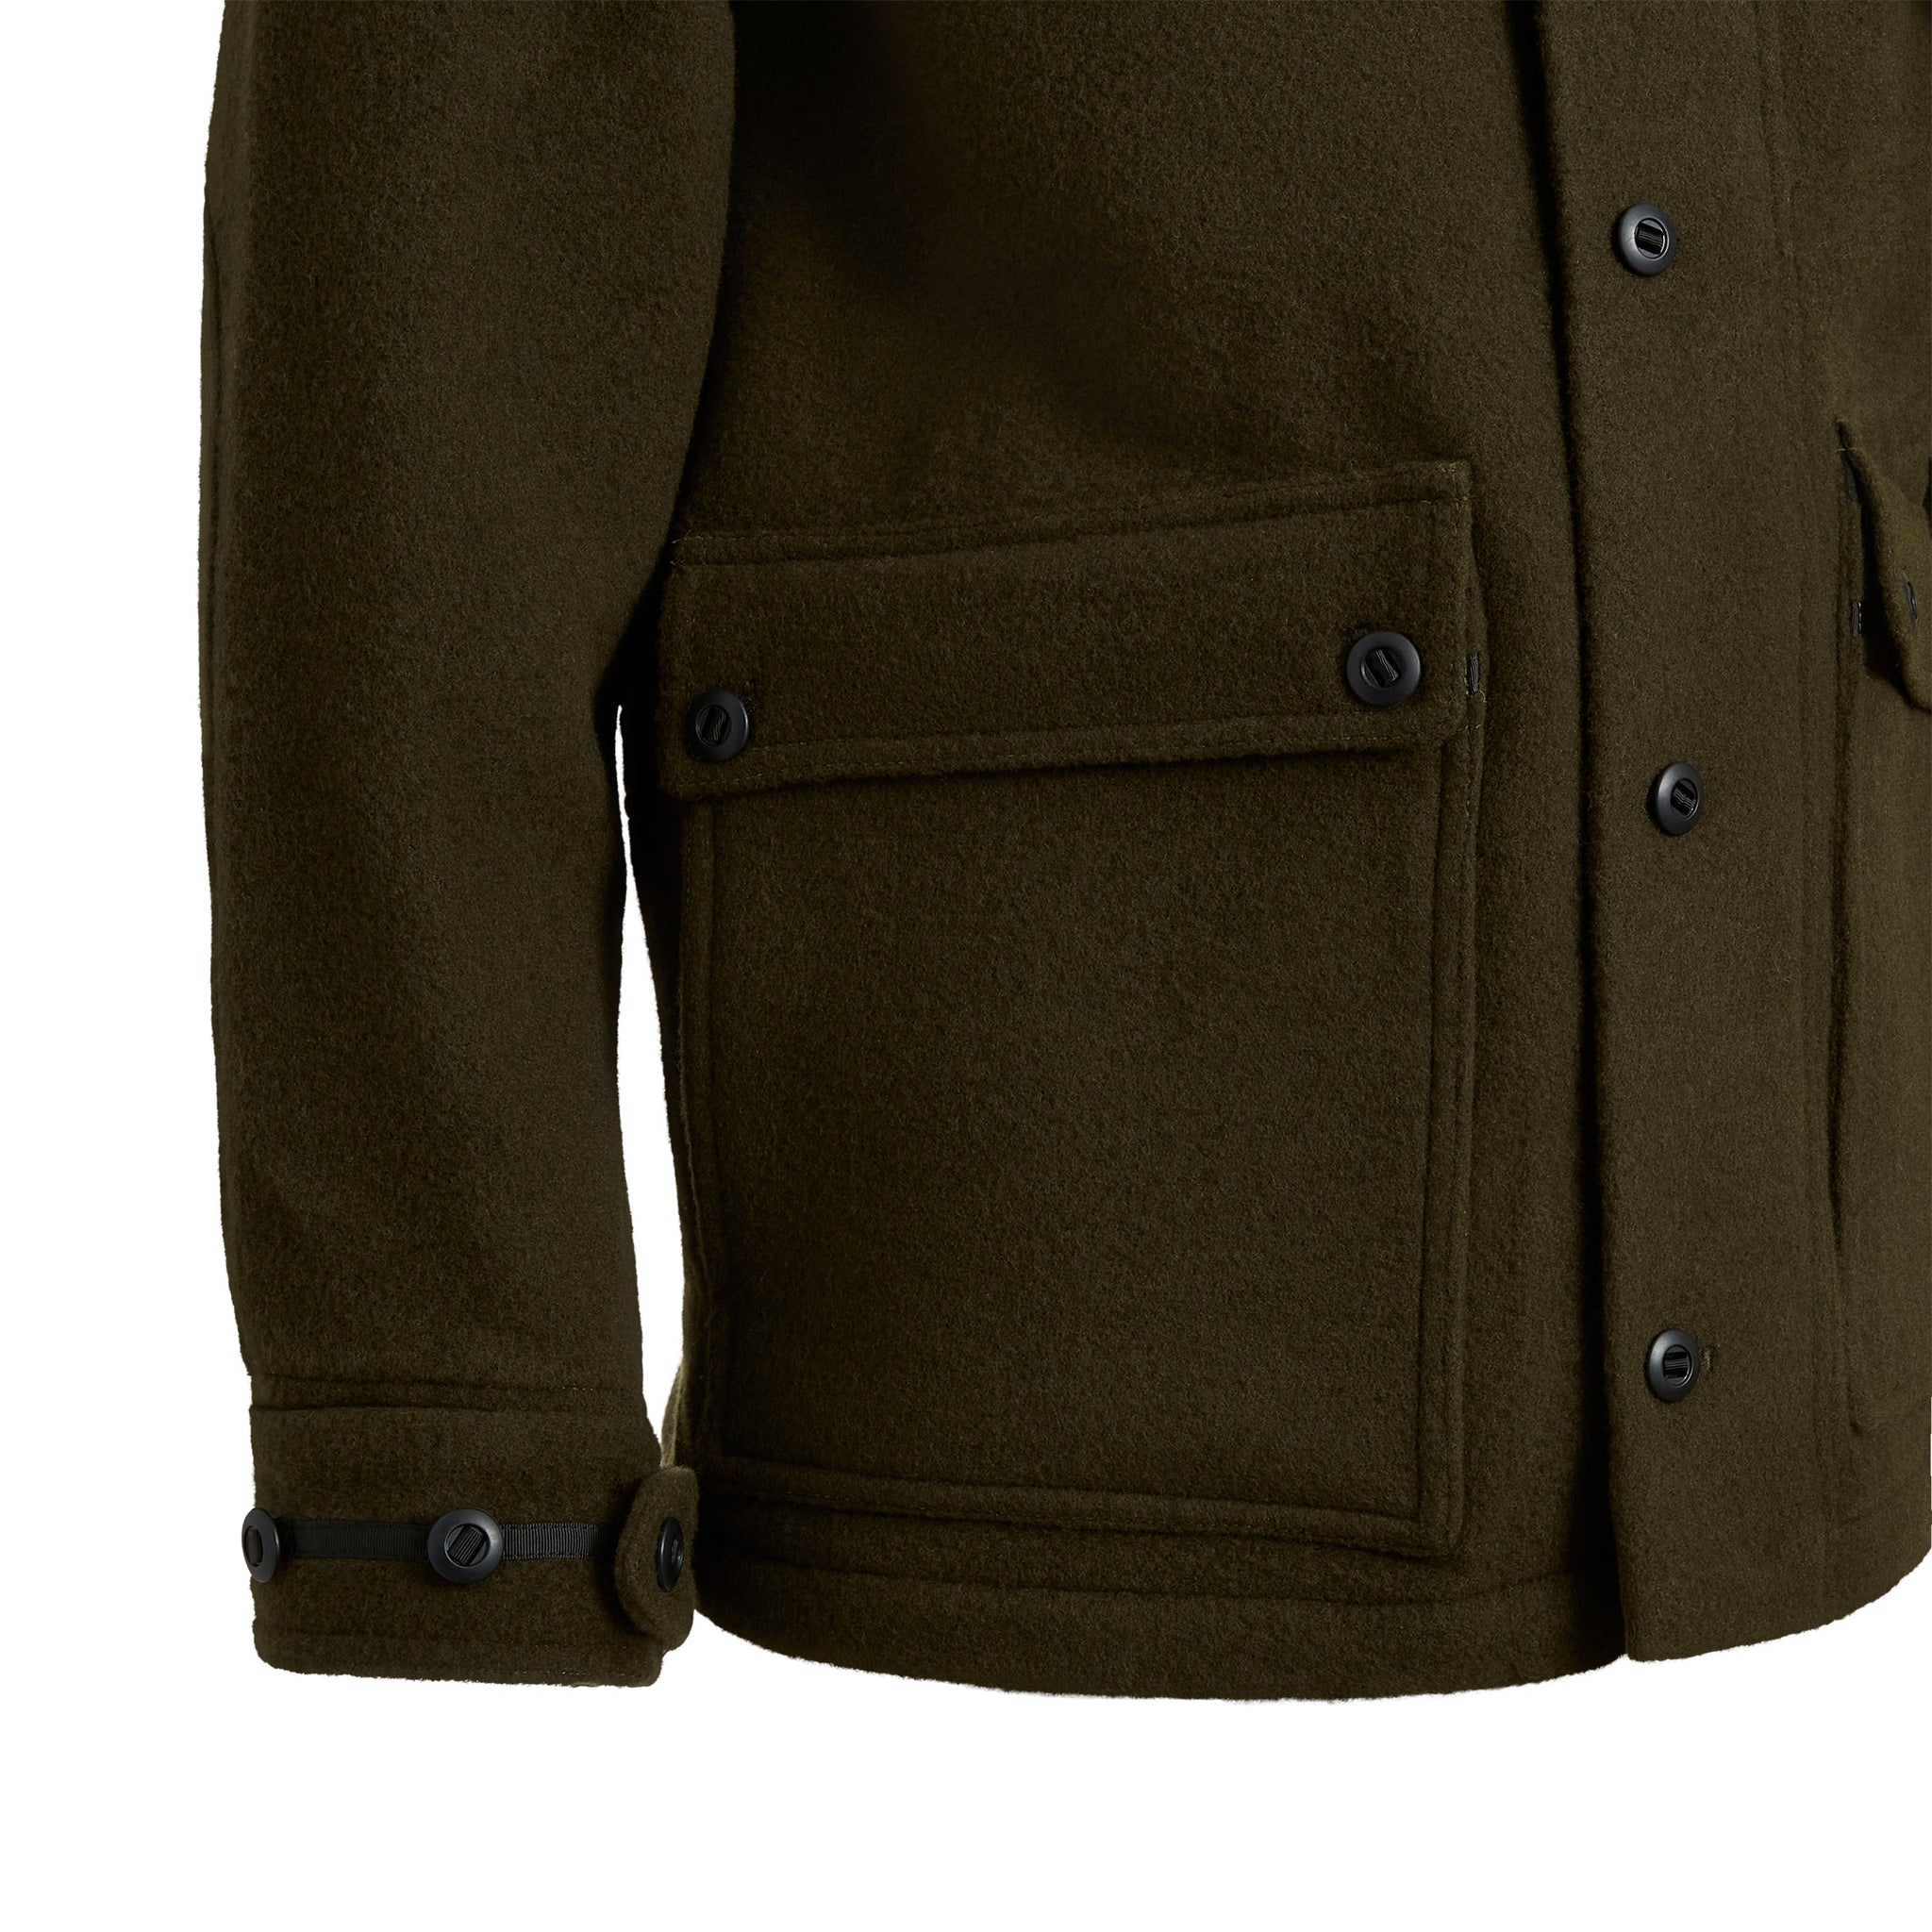 WeatherWool Premium Merino Wool All-Around Jacket Made in USA